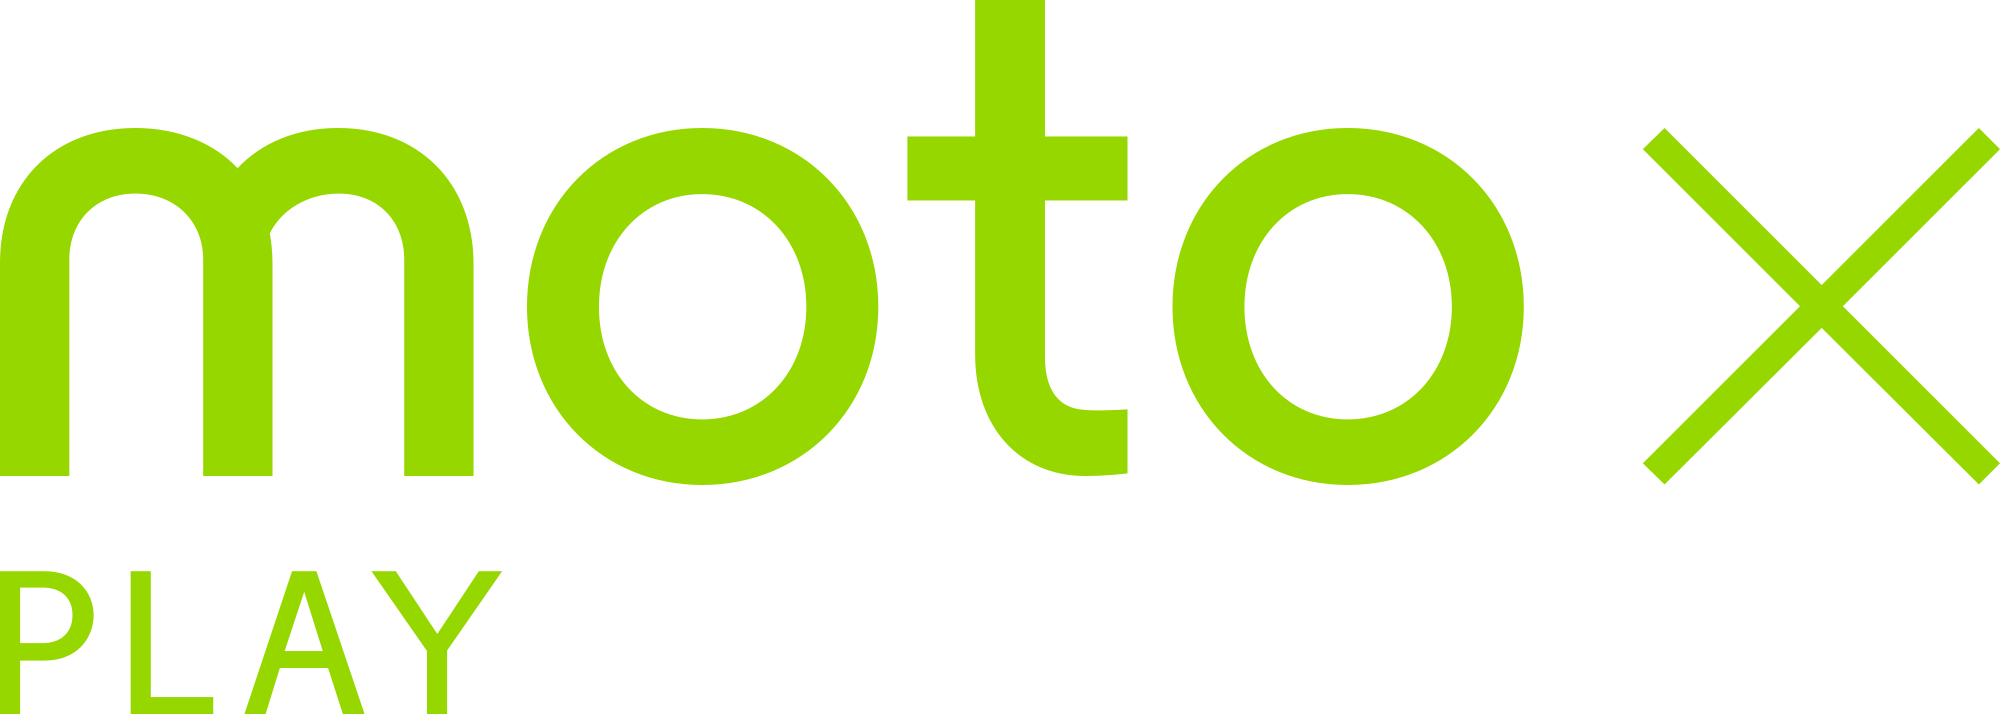 Motorola Moto X Logo - Moto X Play logo.svg